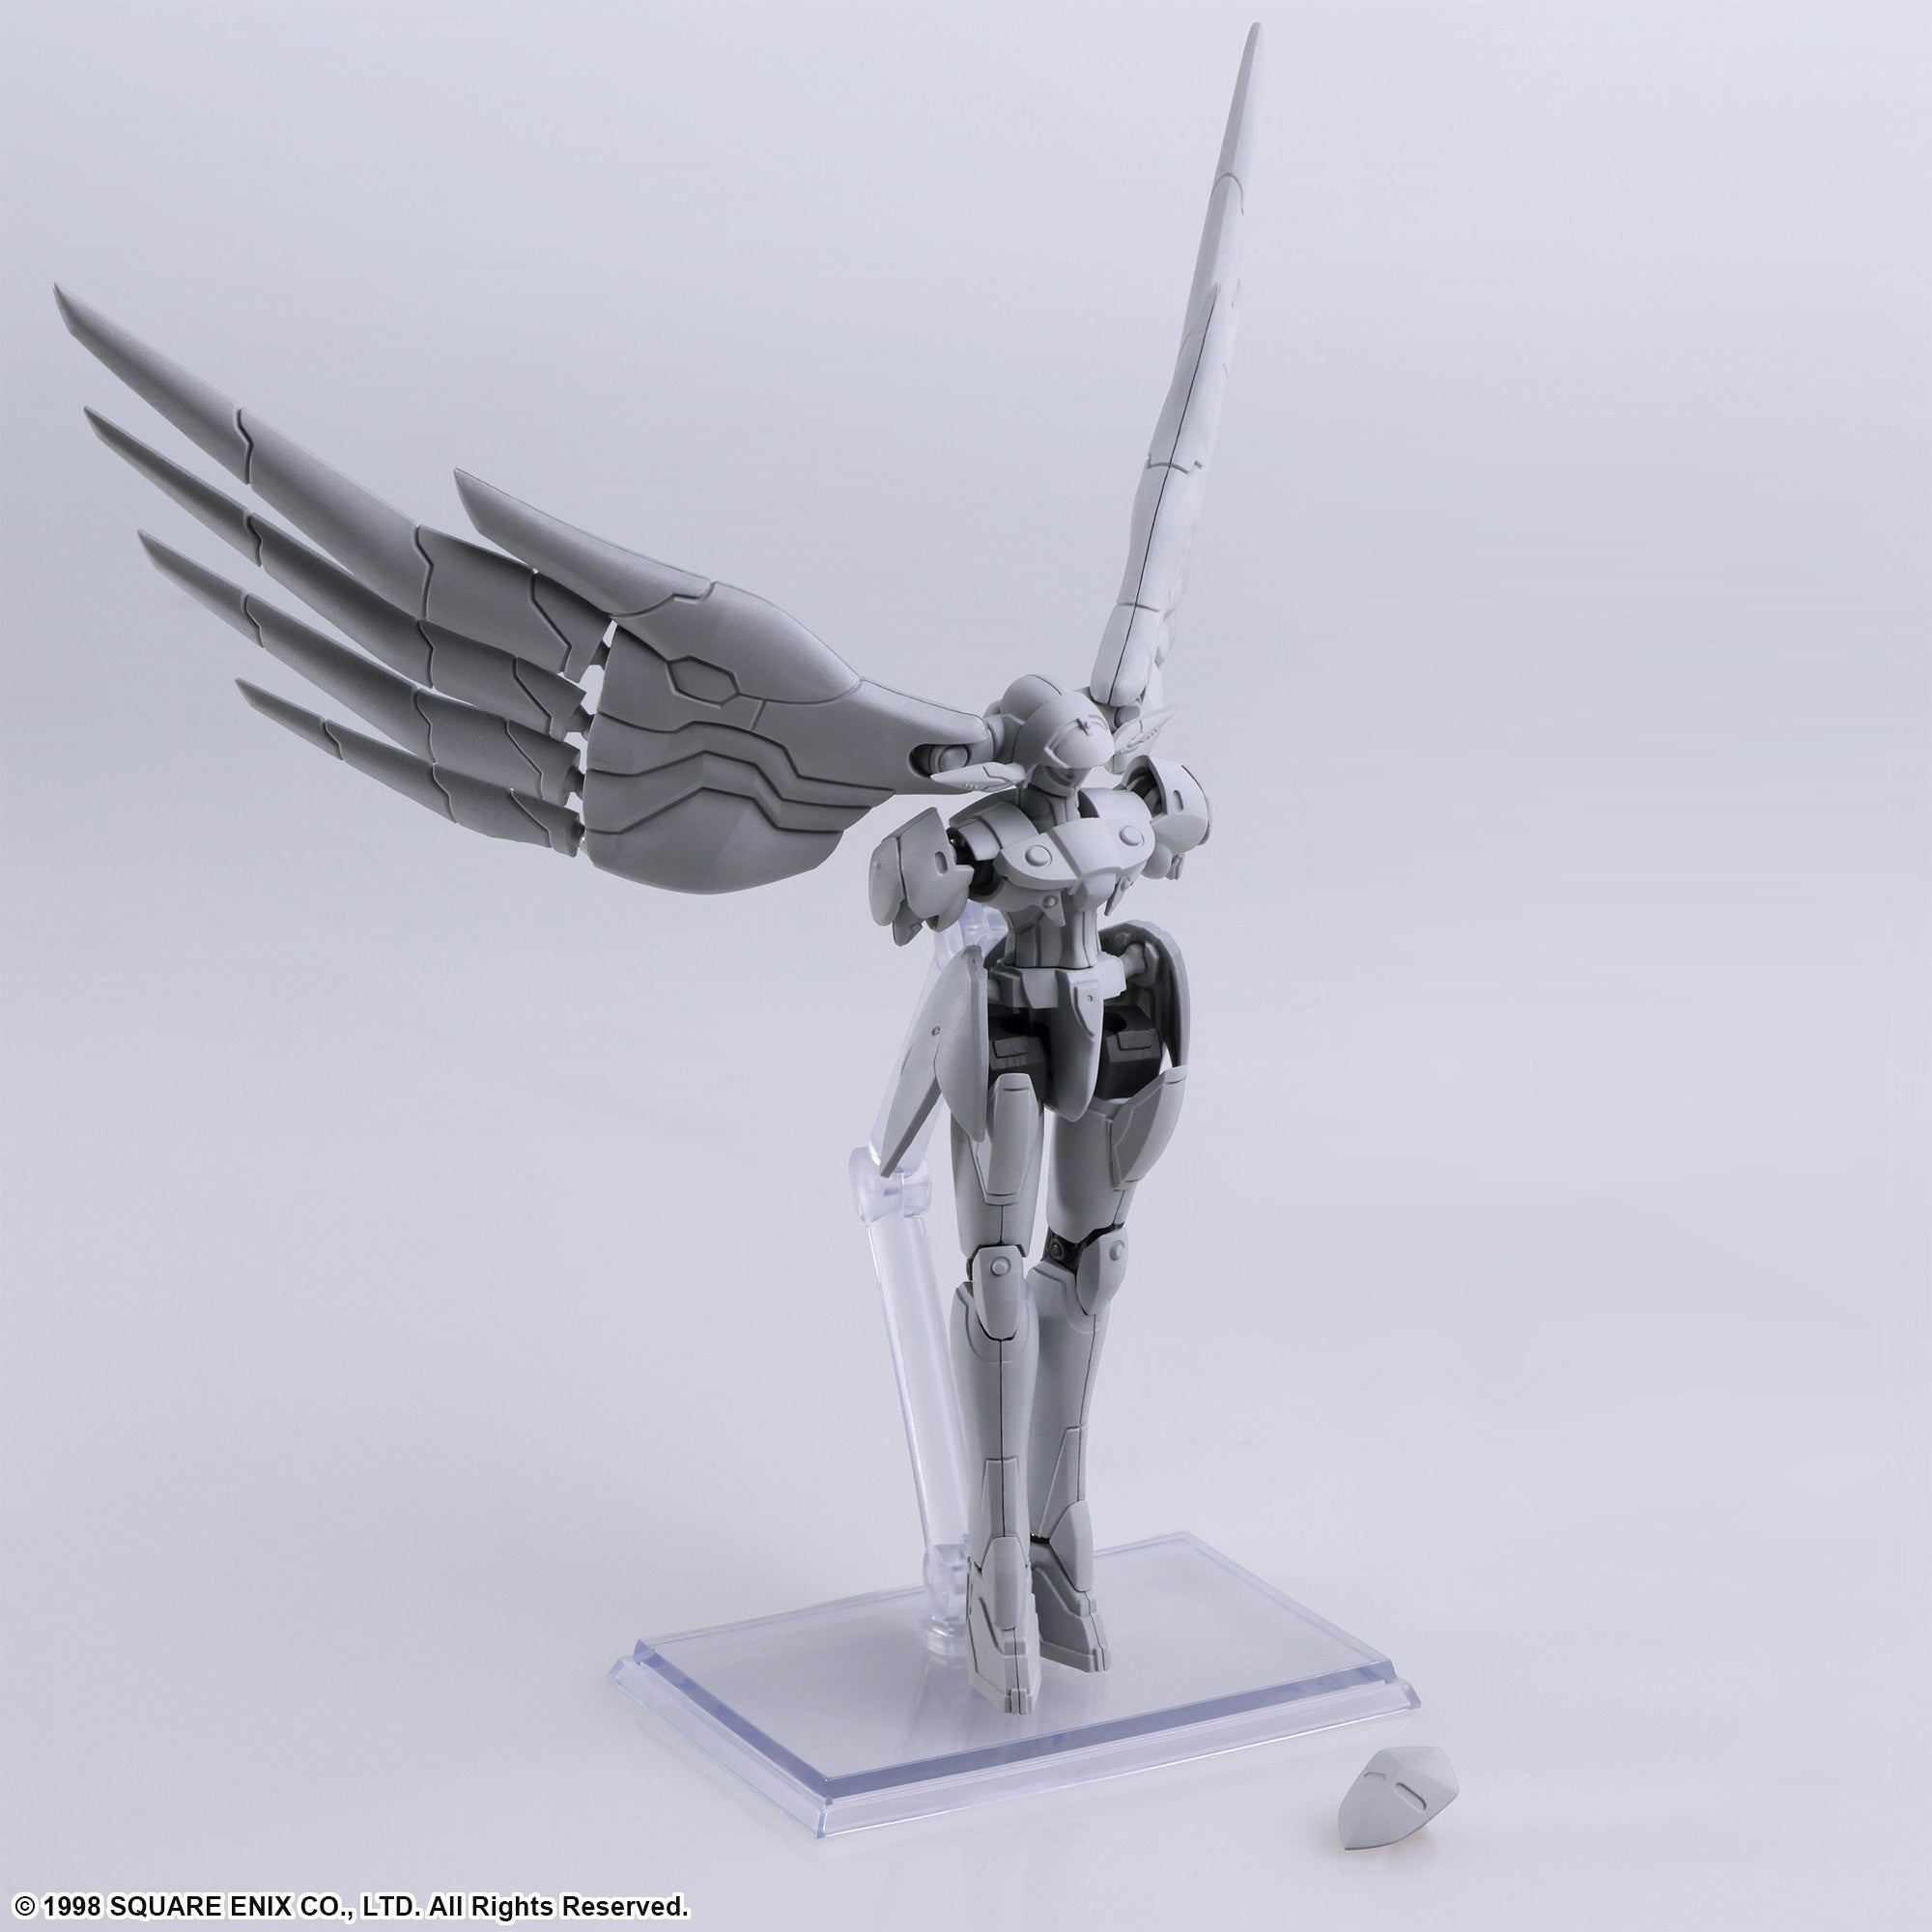 Square Enix Xenogears Structure Arts 1/144 Scale Plastic Model Kit Series Vol.2 Box